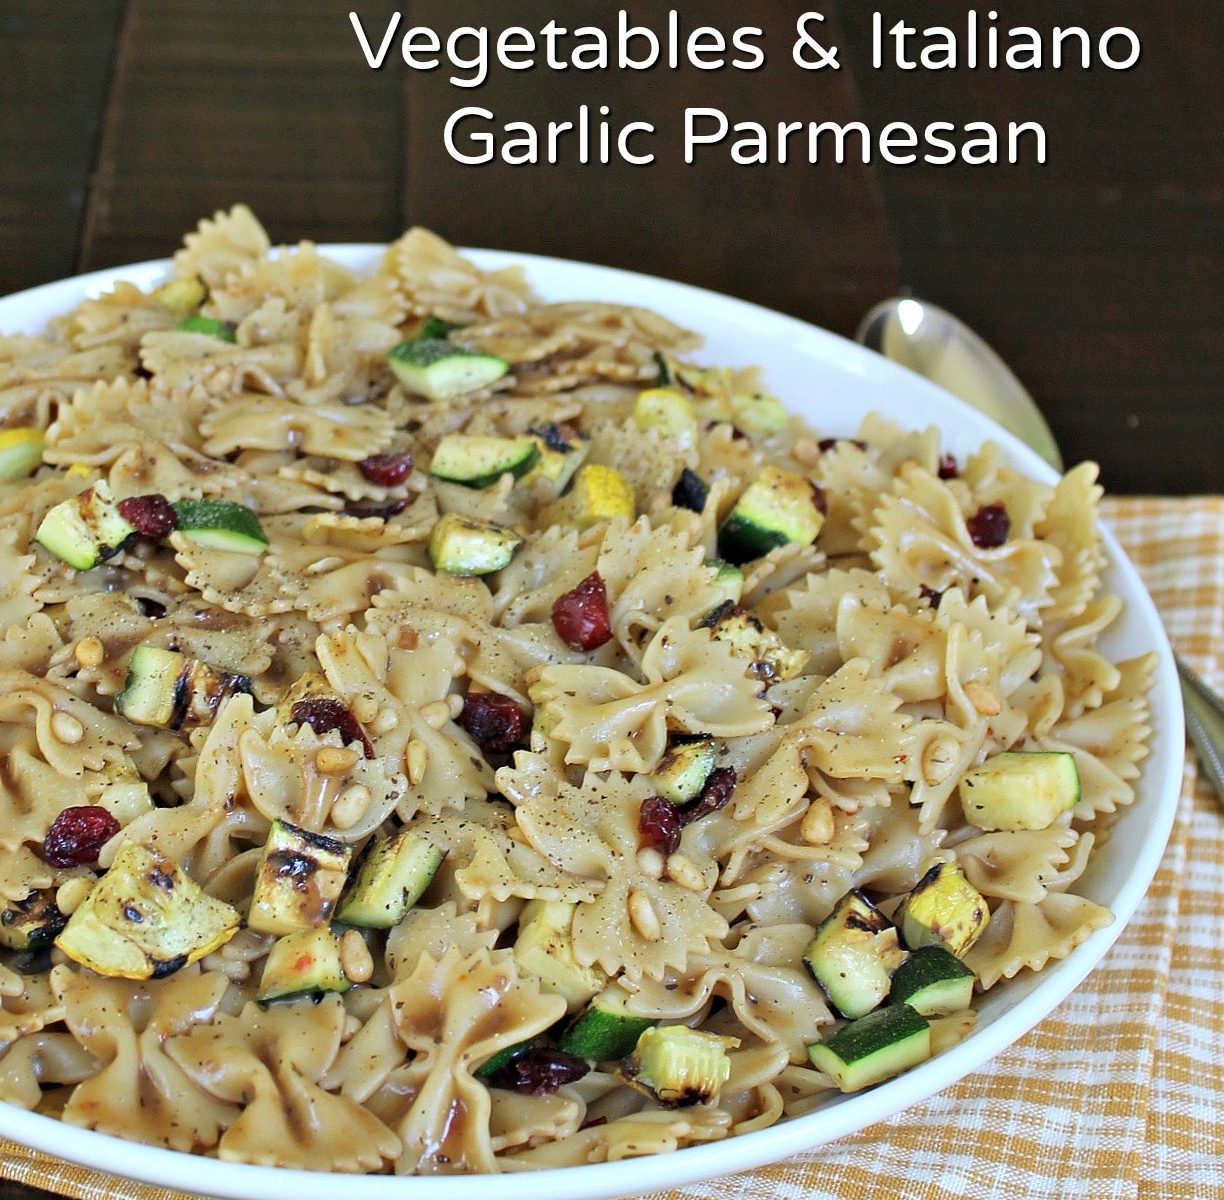 Pasta Salad with Grilled Vegetables & Italiano Garlic Parmesan  – Quick, Delicious & Super Economical!